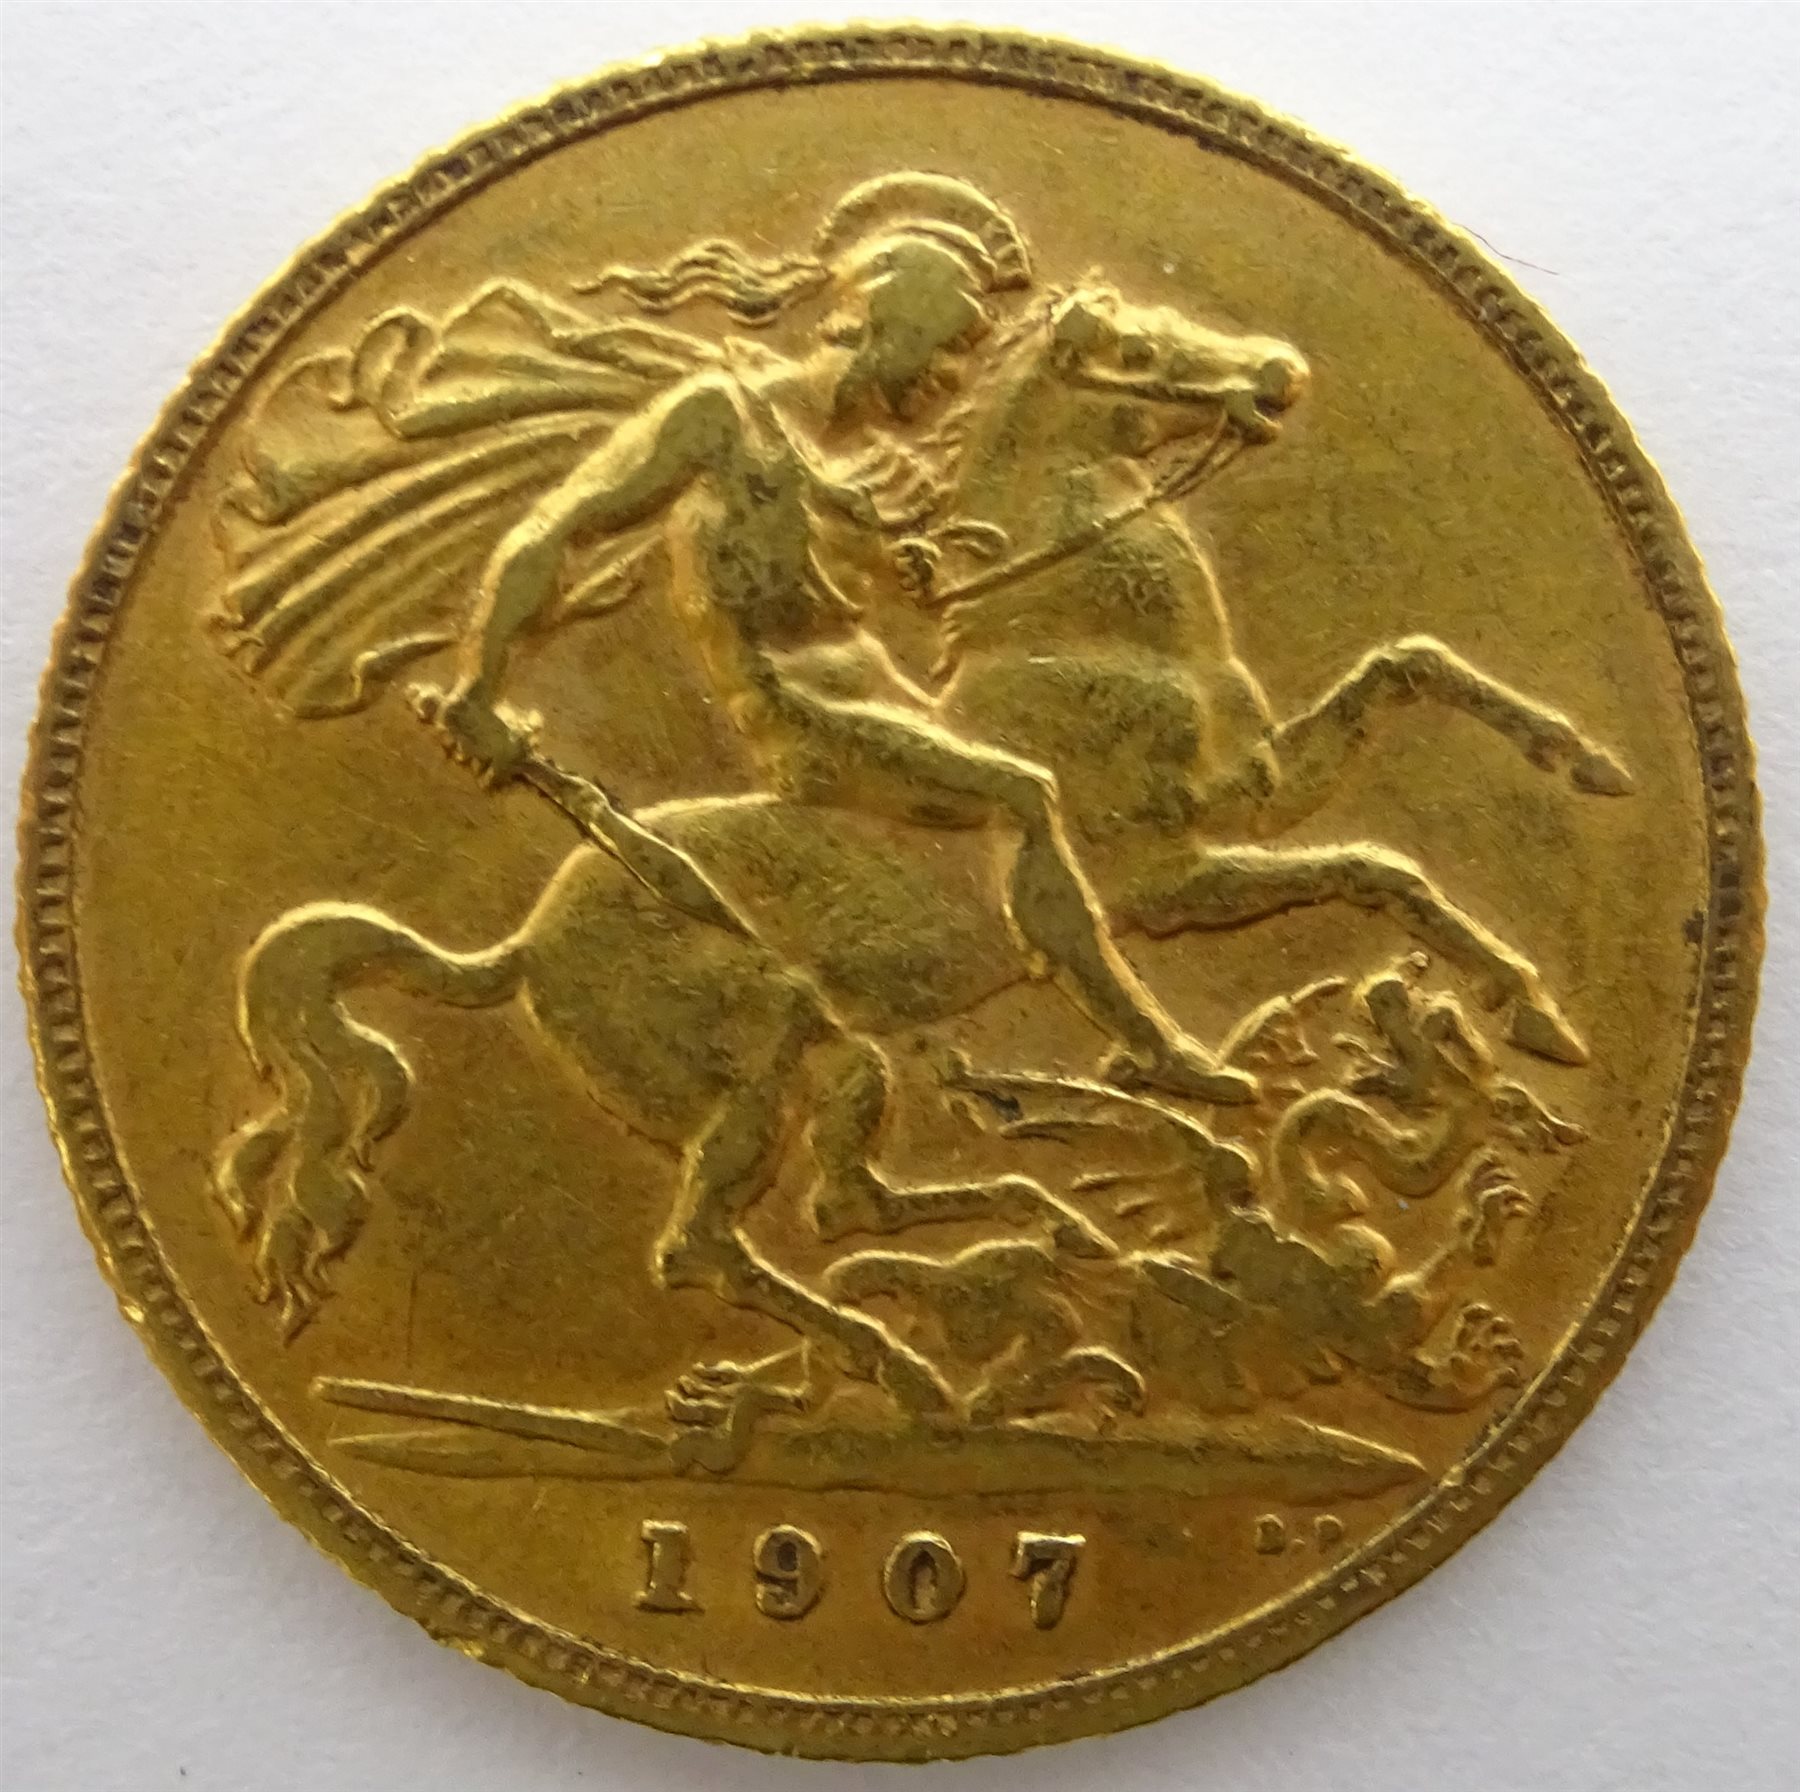 King Edward VII 1907 gold half sovereign - Coins, Banknotes & Stamps